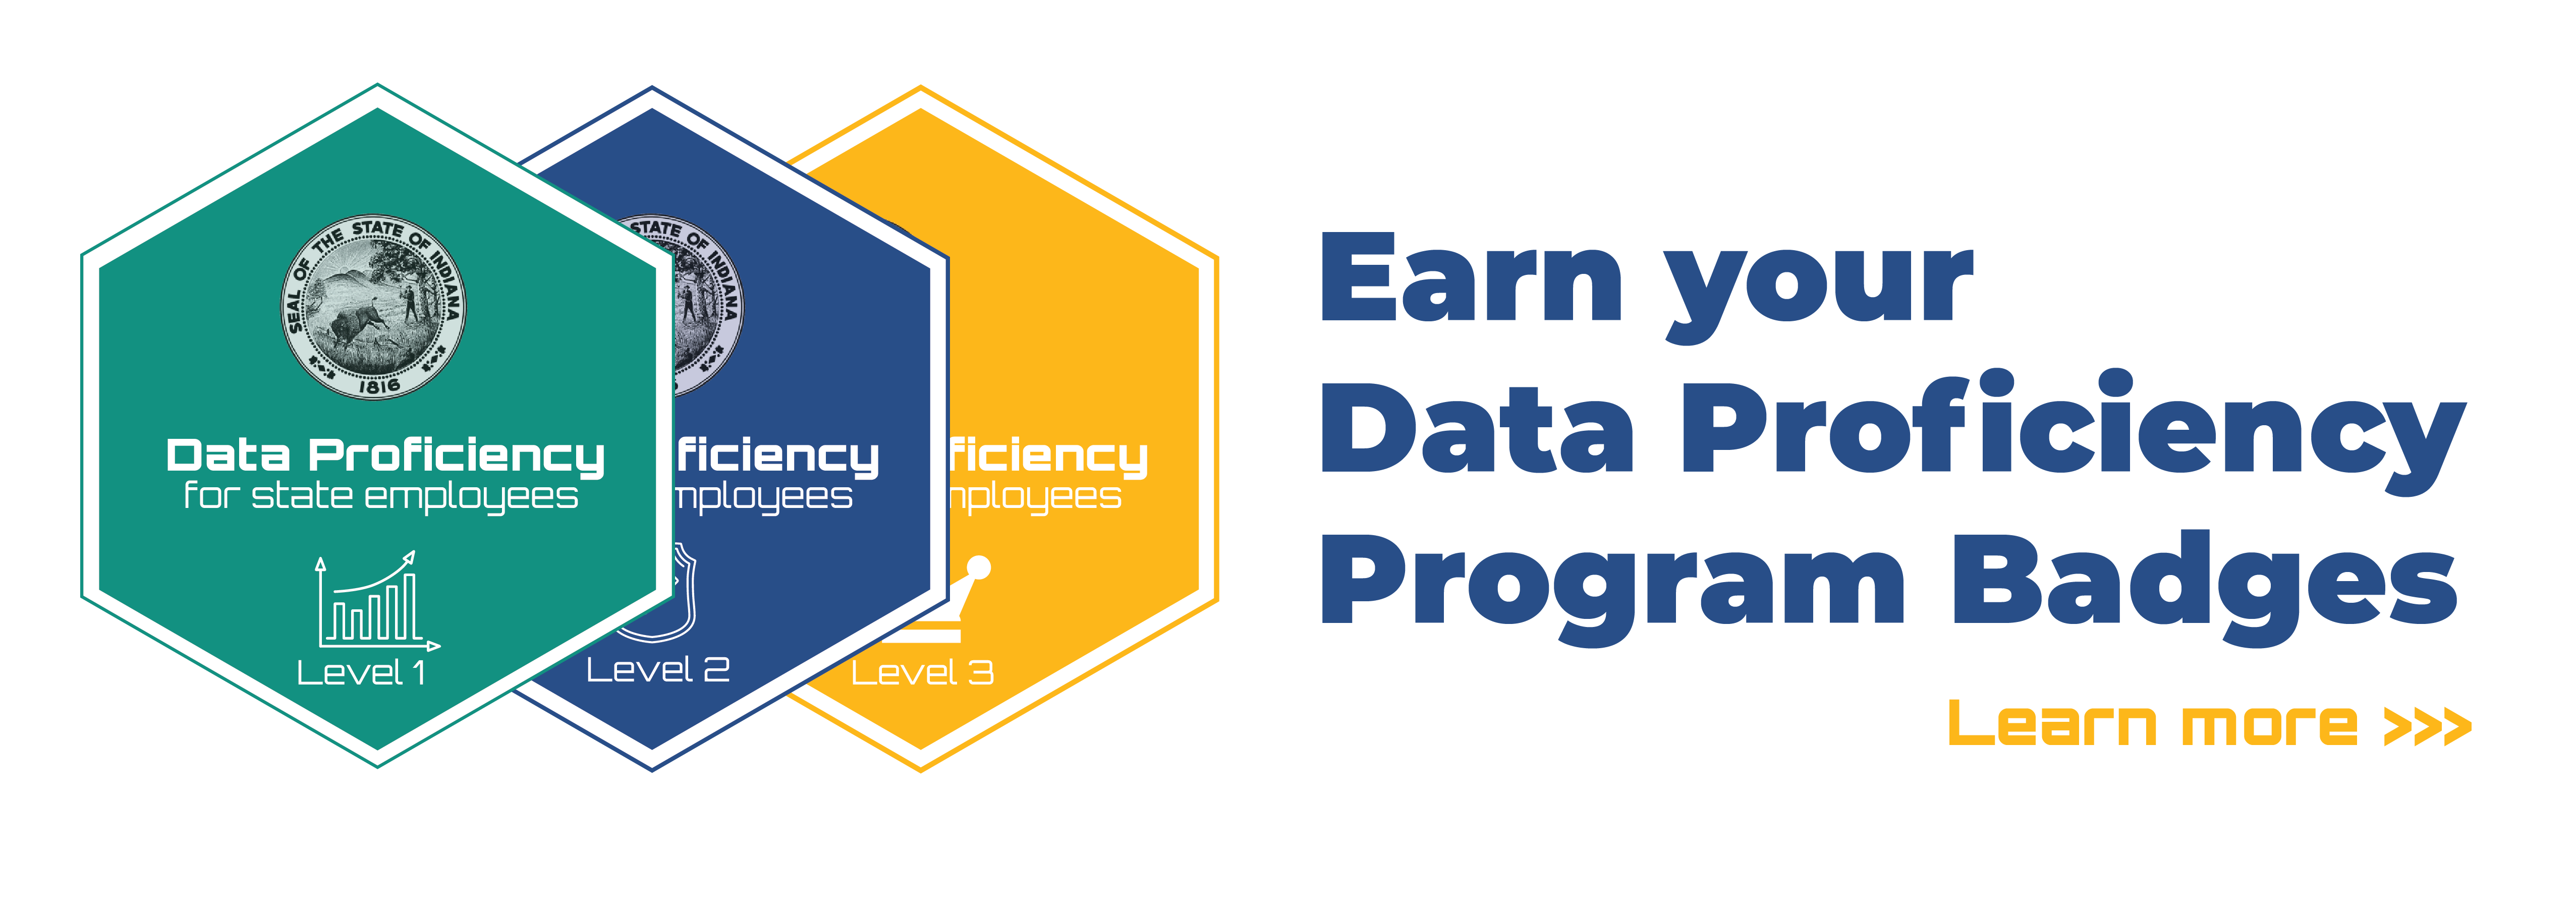 Earn you Data Proficiency Program Badges